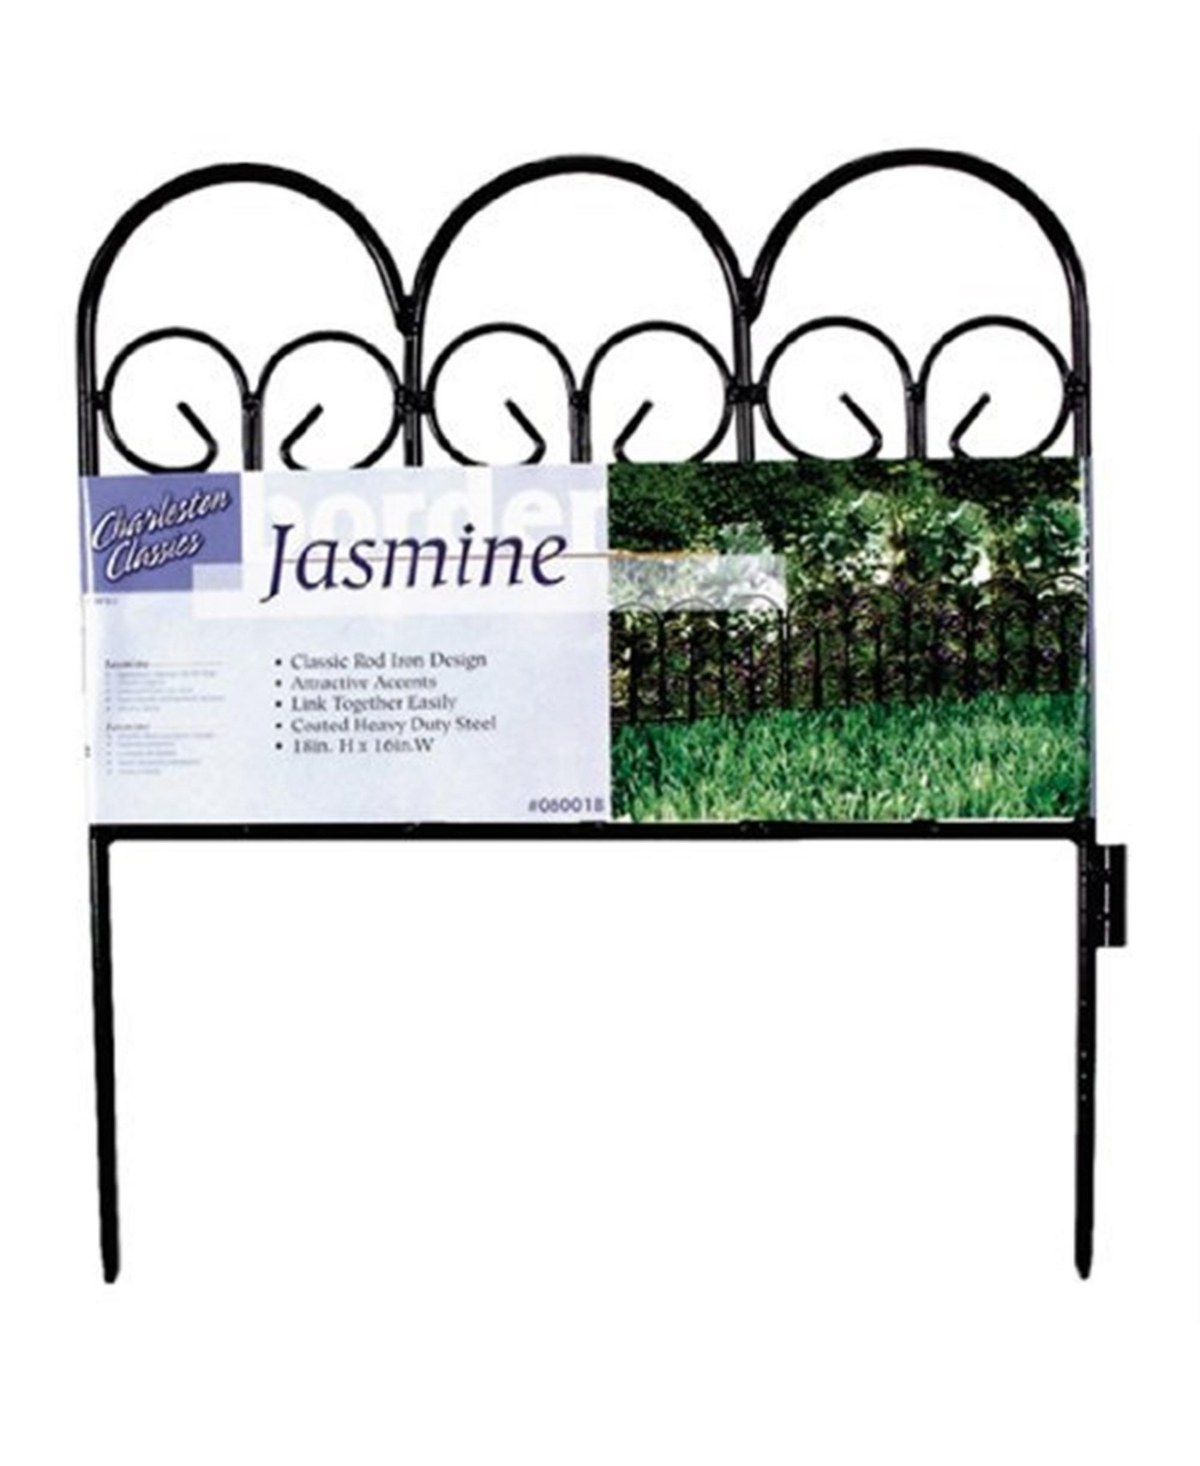 Jasmine Decorative Steel Landscape Border Fence Section - Black